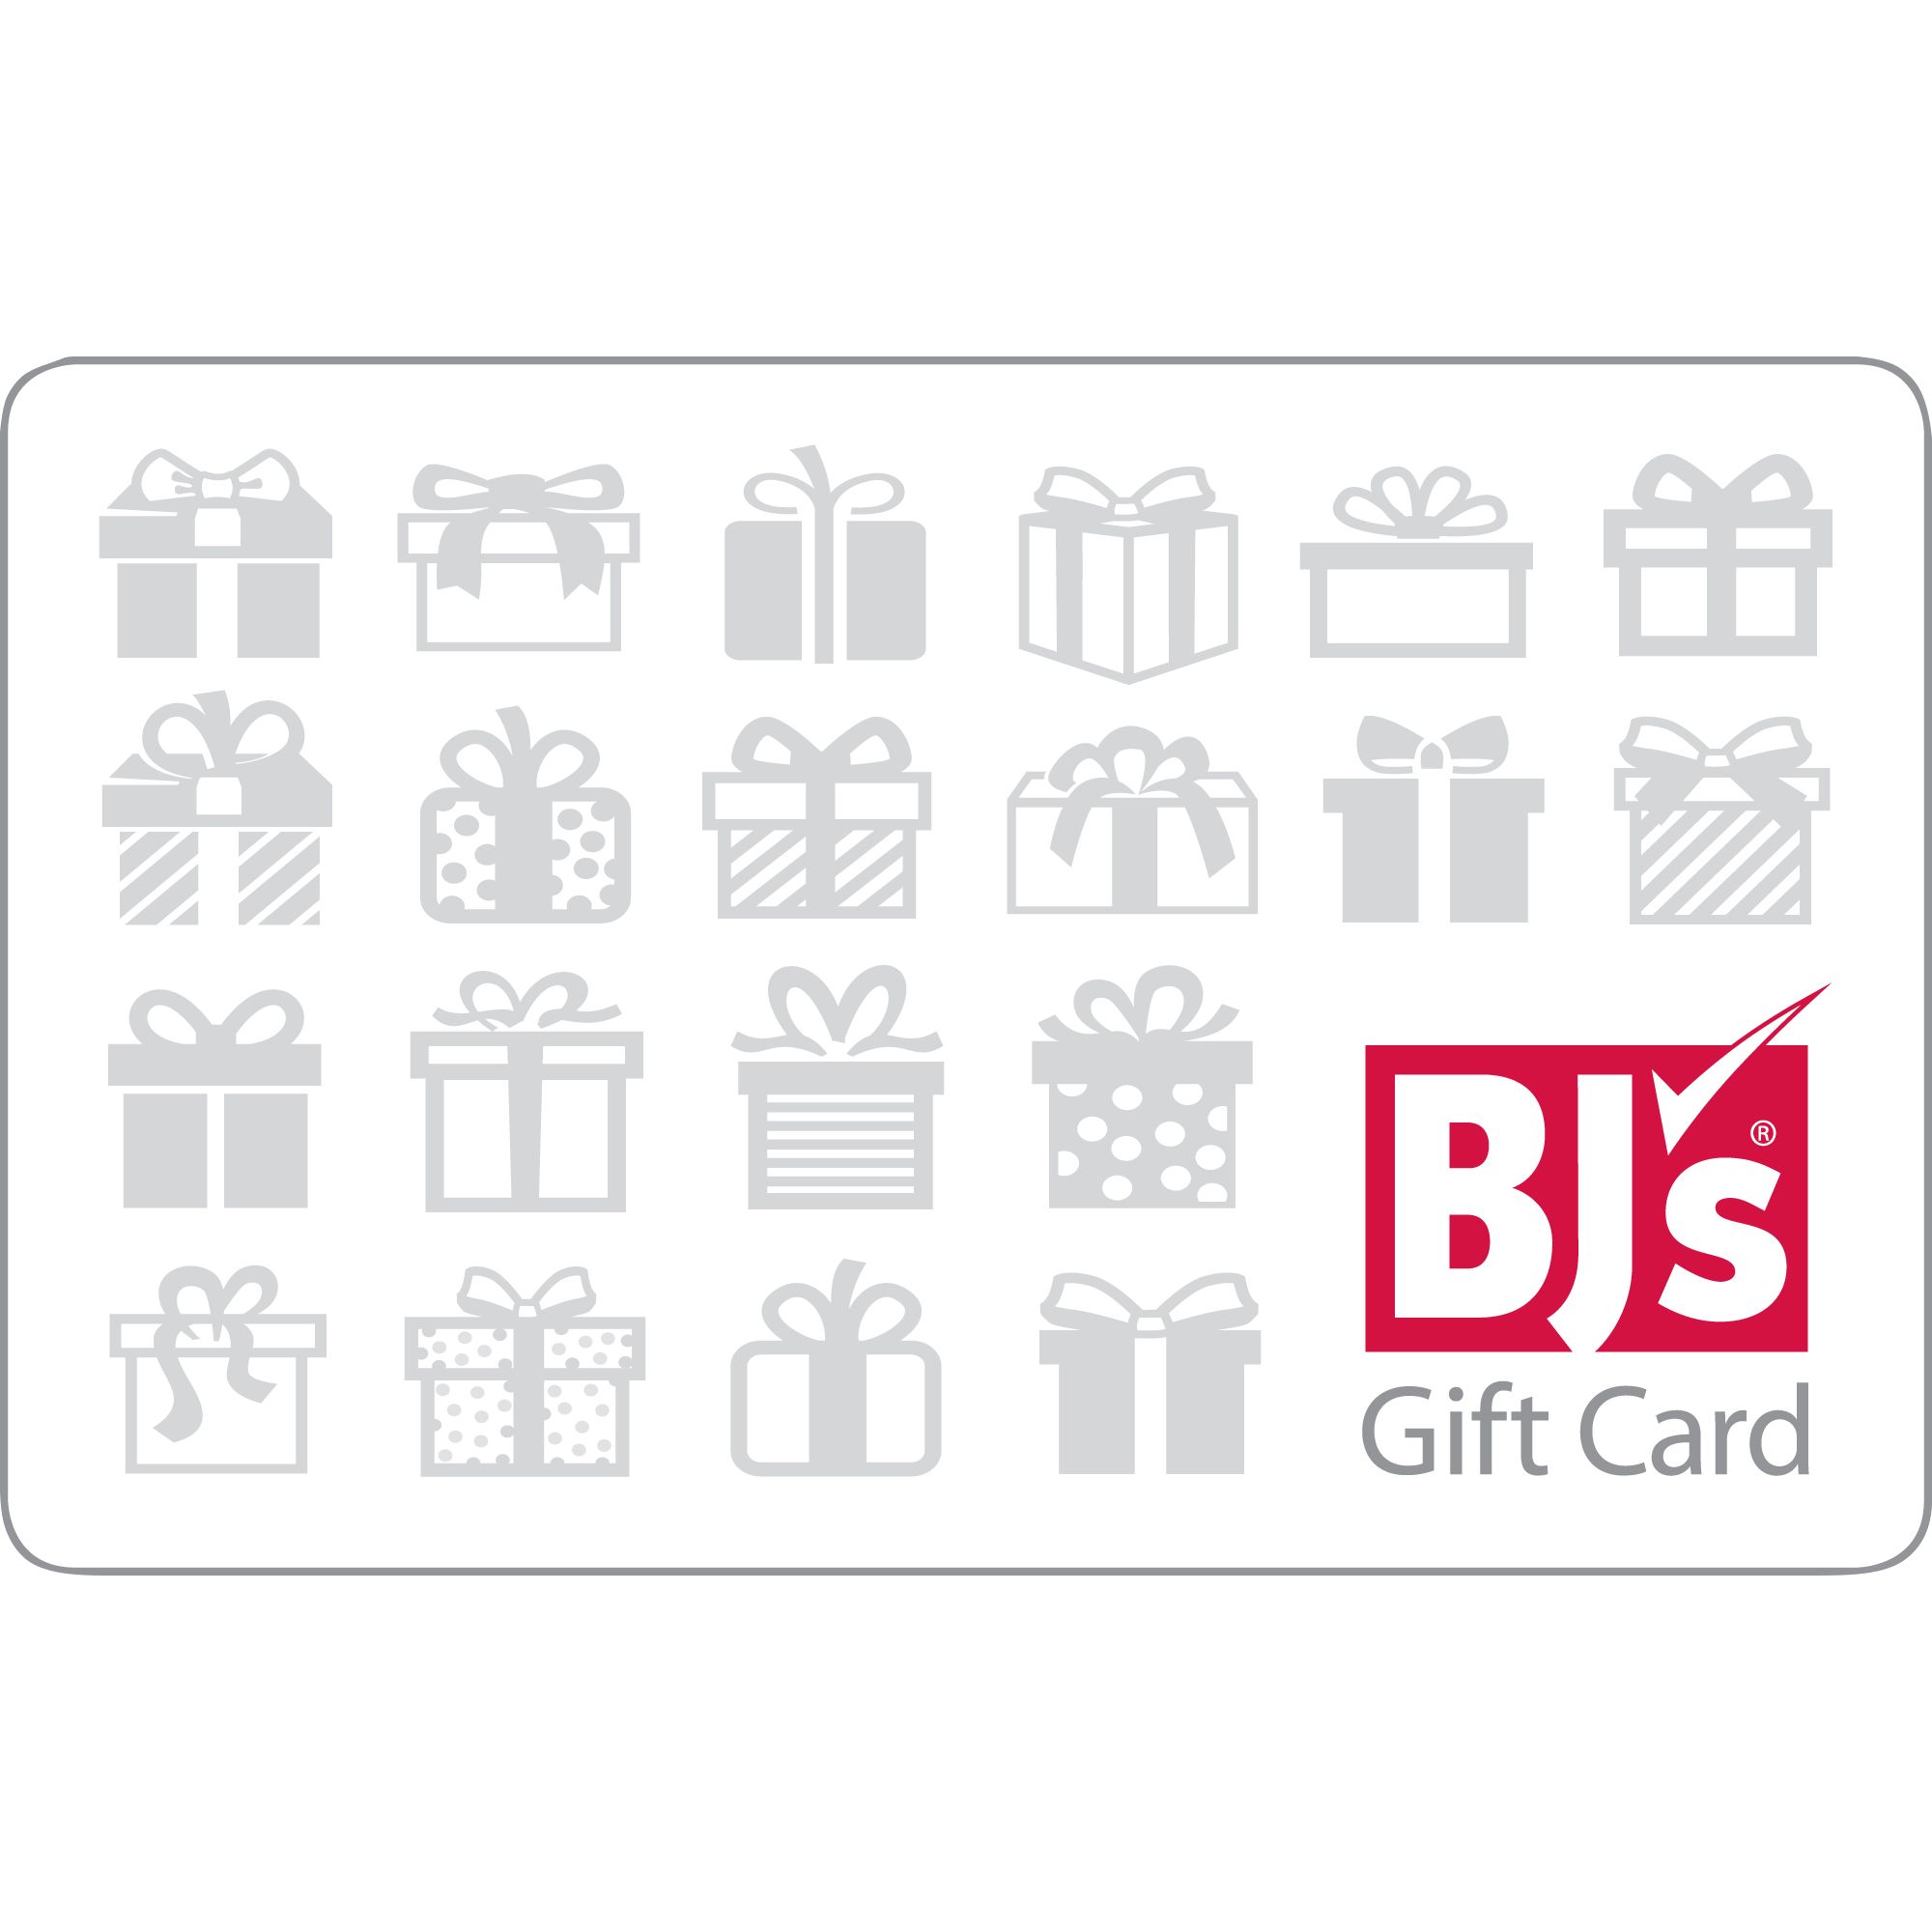 Vanilla Visa Gift Box Multipack $75 3x$25 + $8.95 fee Gift Cards